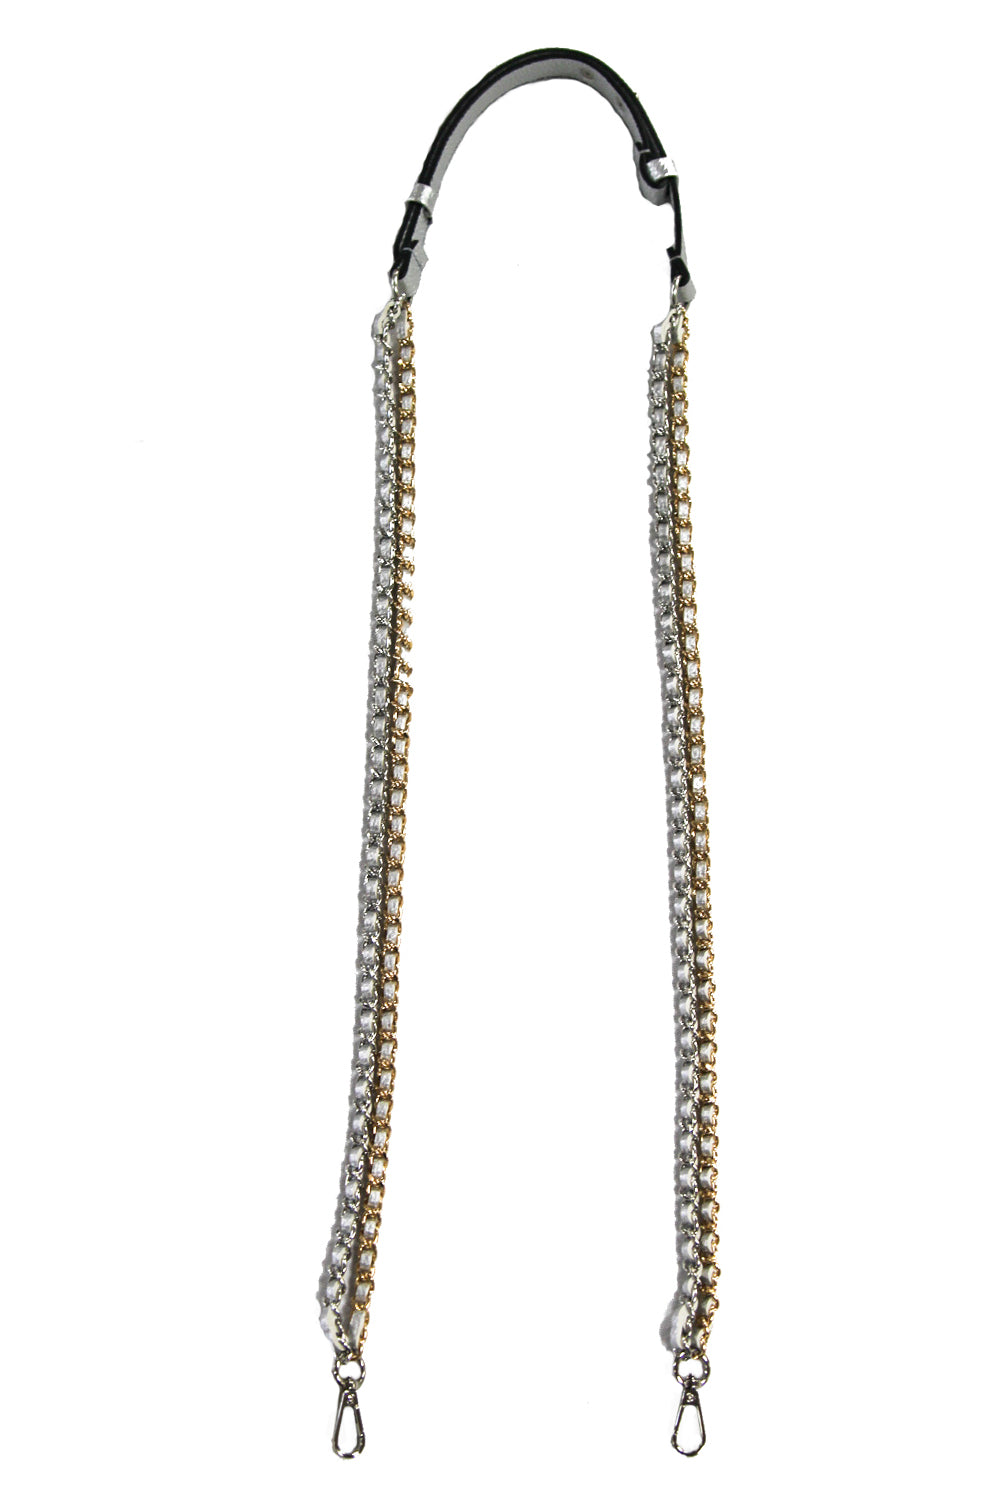 St108 Special Metal Gold Bag Handle Chains for Handbag Ladies